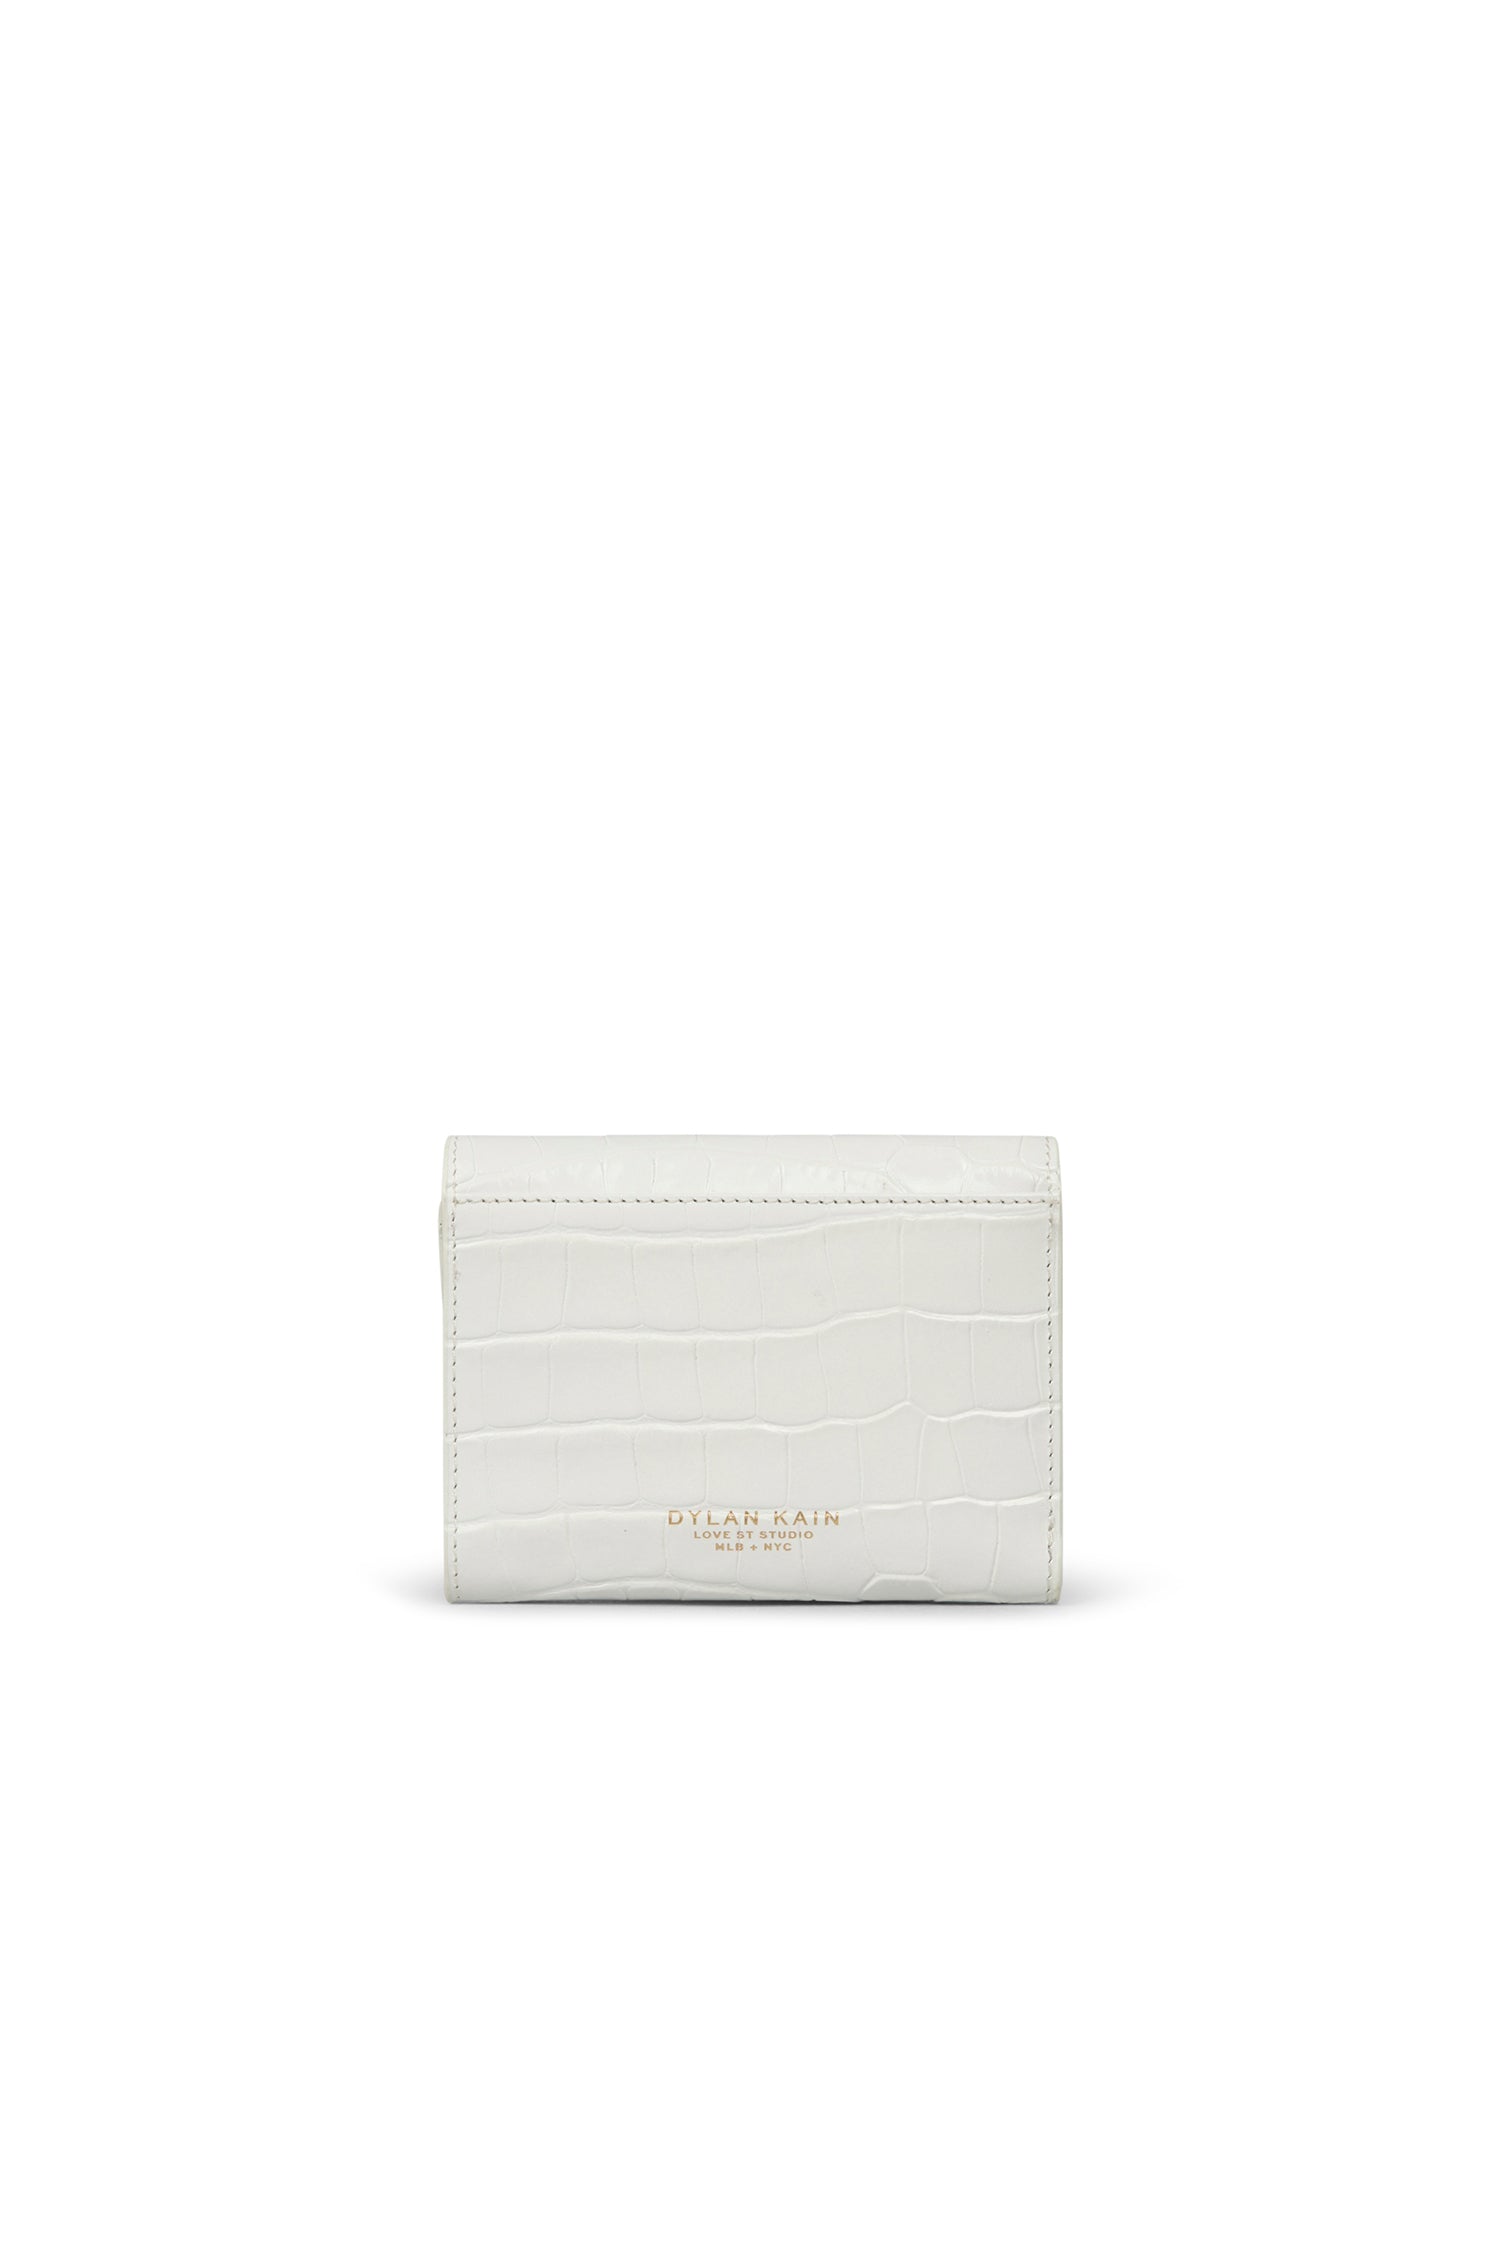 The Helena Wallet White